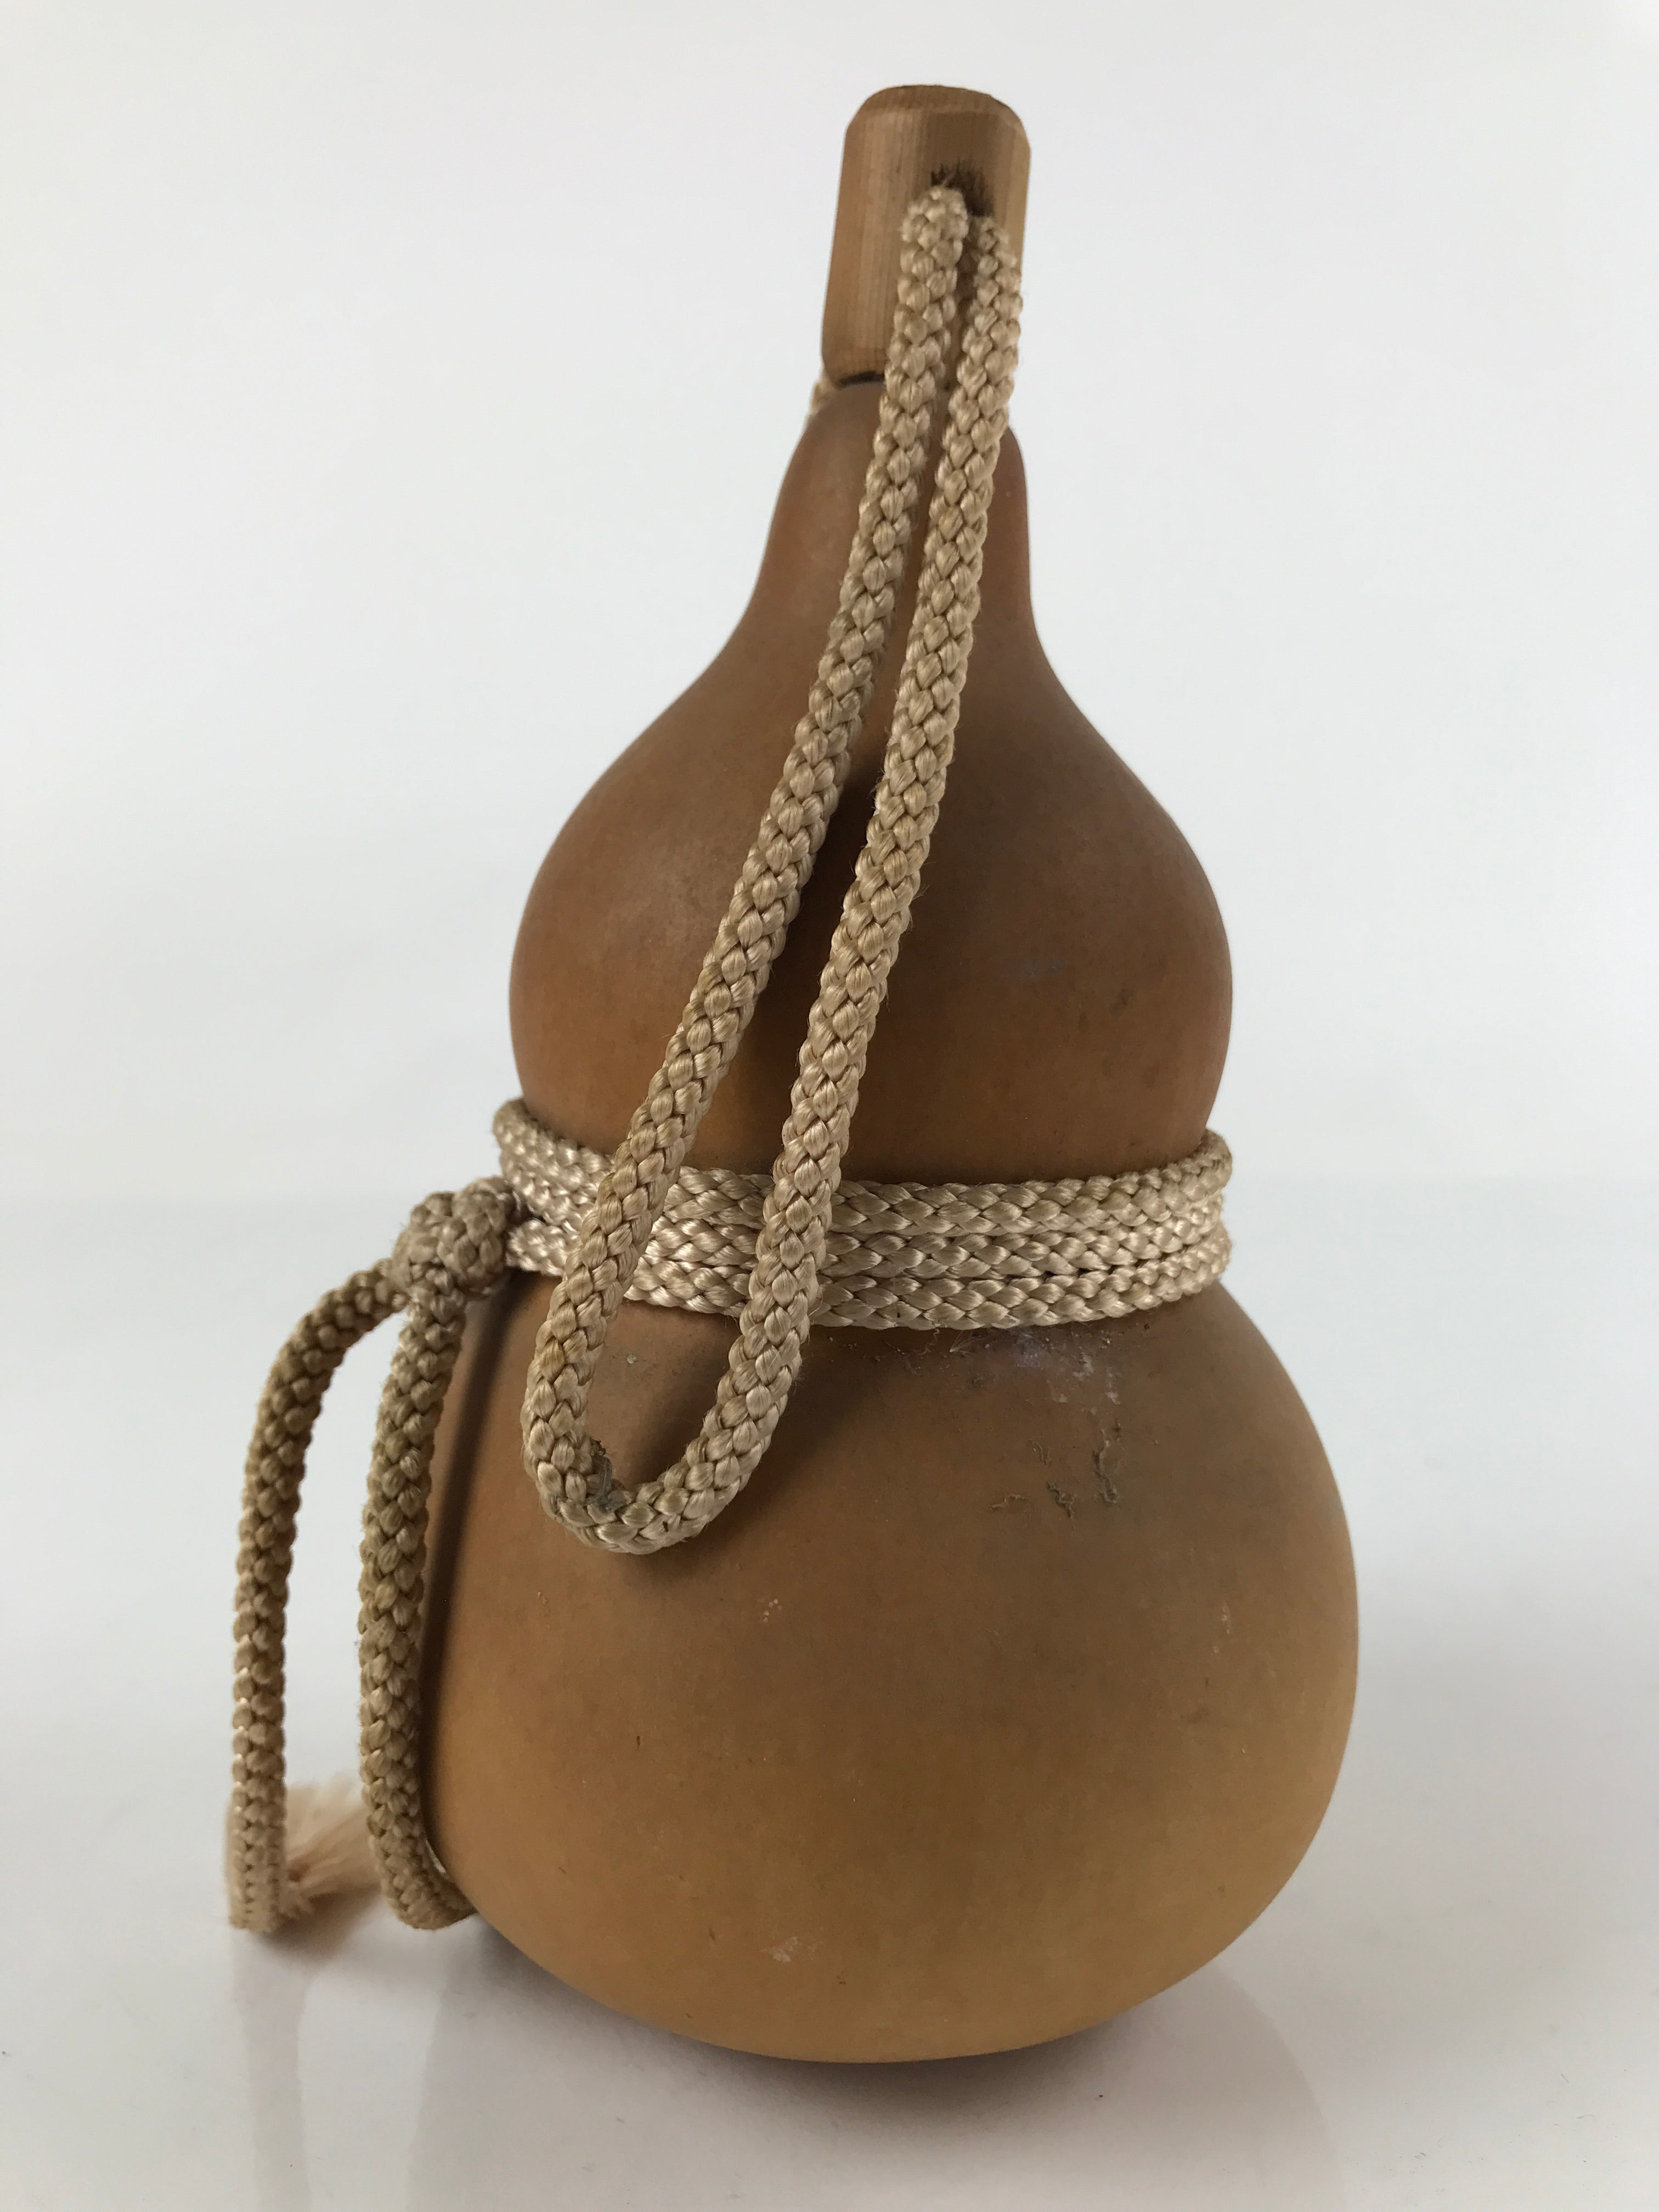 Japanese Natural Hyotan Gourd Vtg Sake Bottle Lucky Charm Calabash Lidded G259